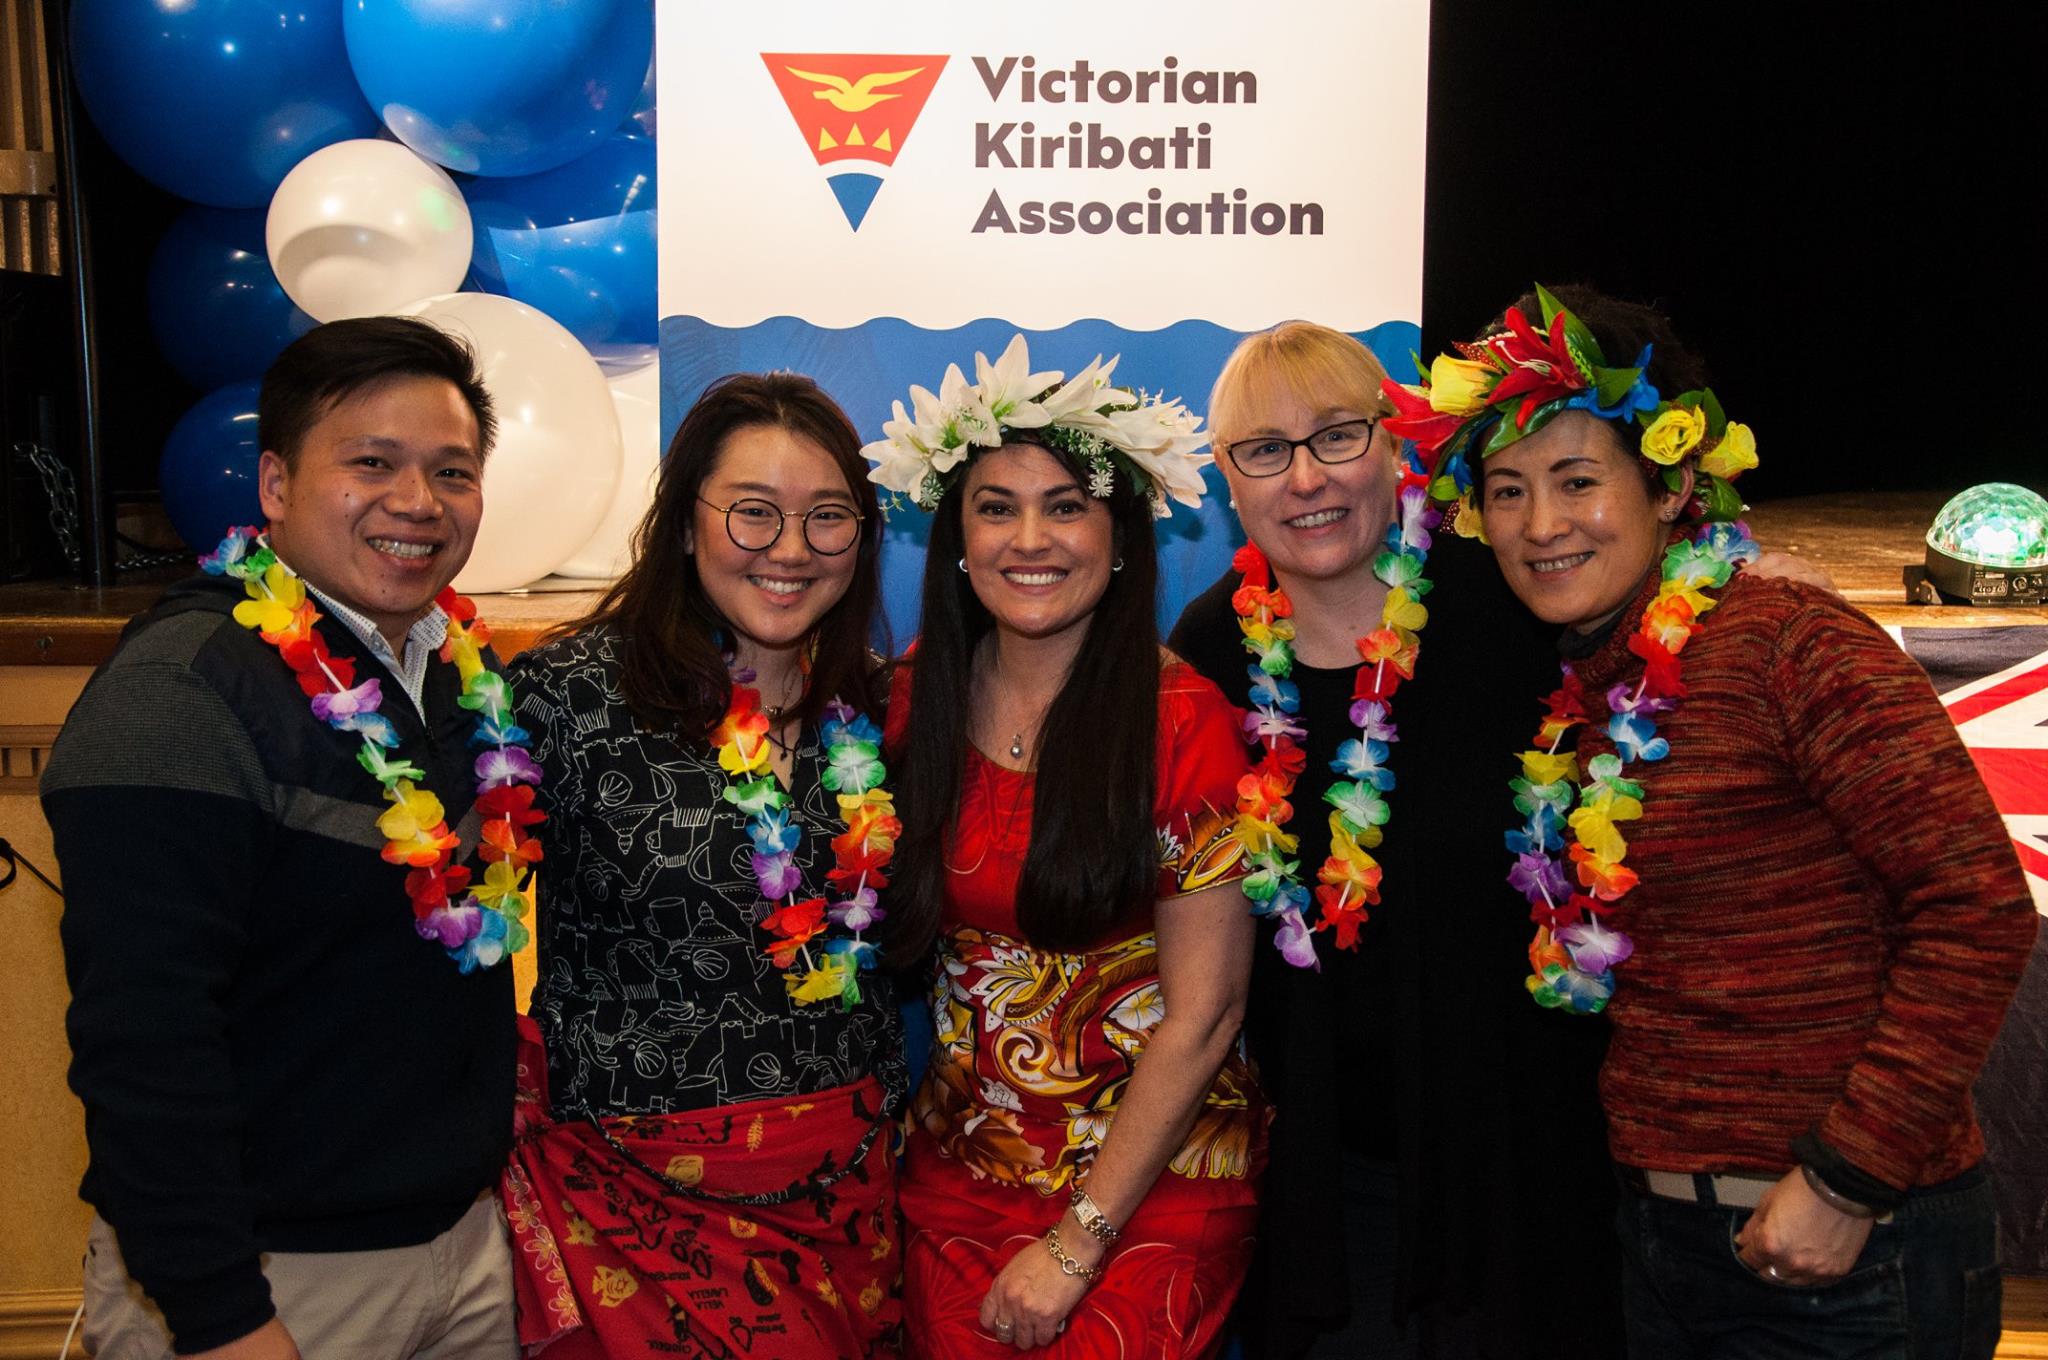 Victorian Kiribati Association